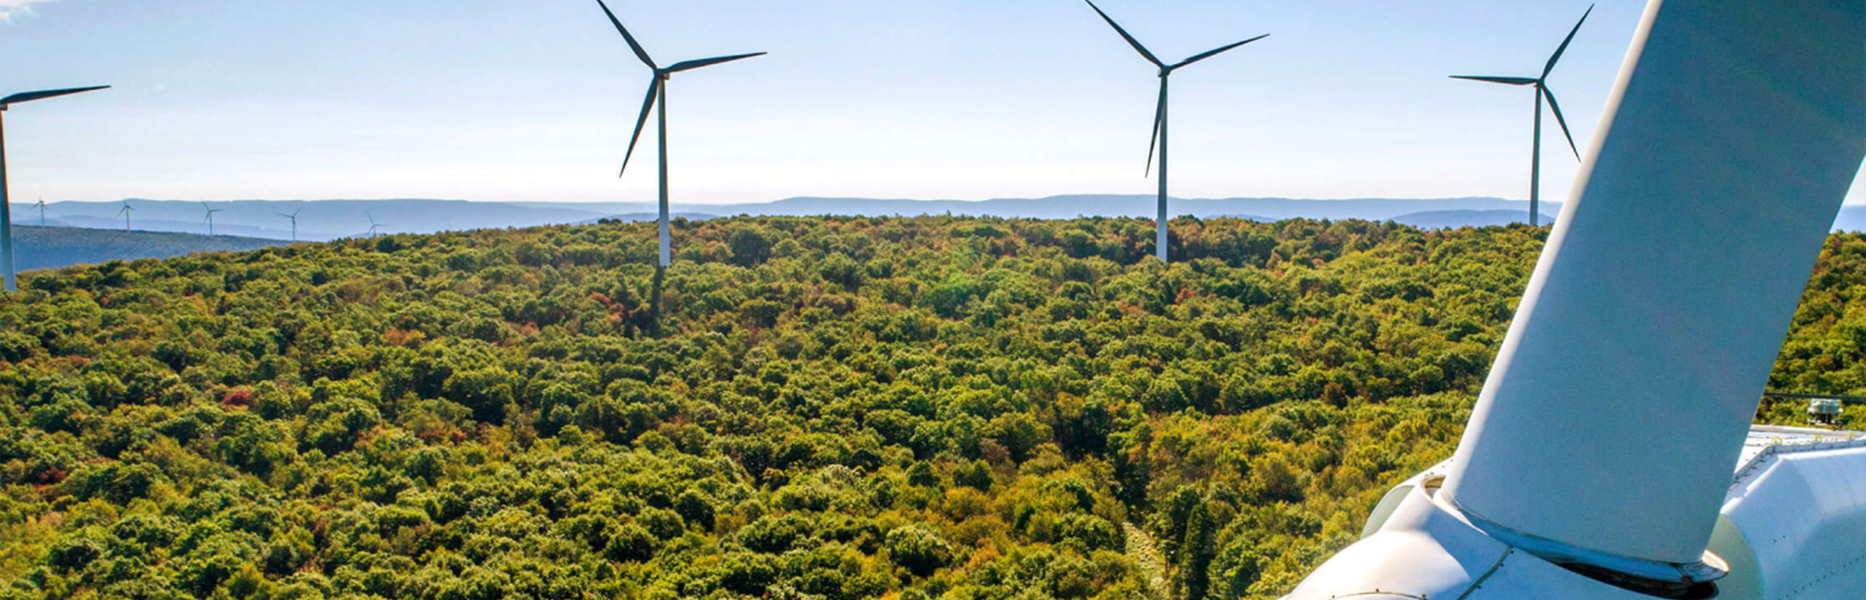 hero-renewable-windmill-in-trees